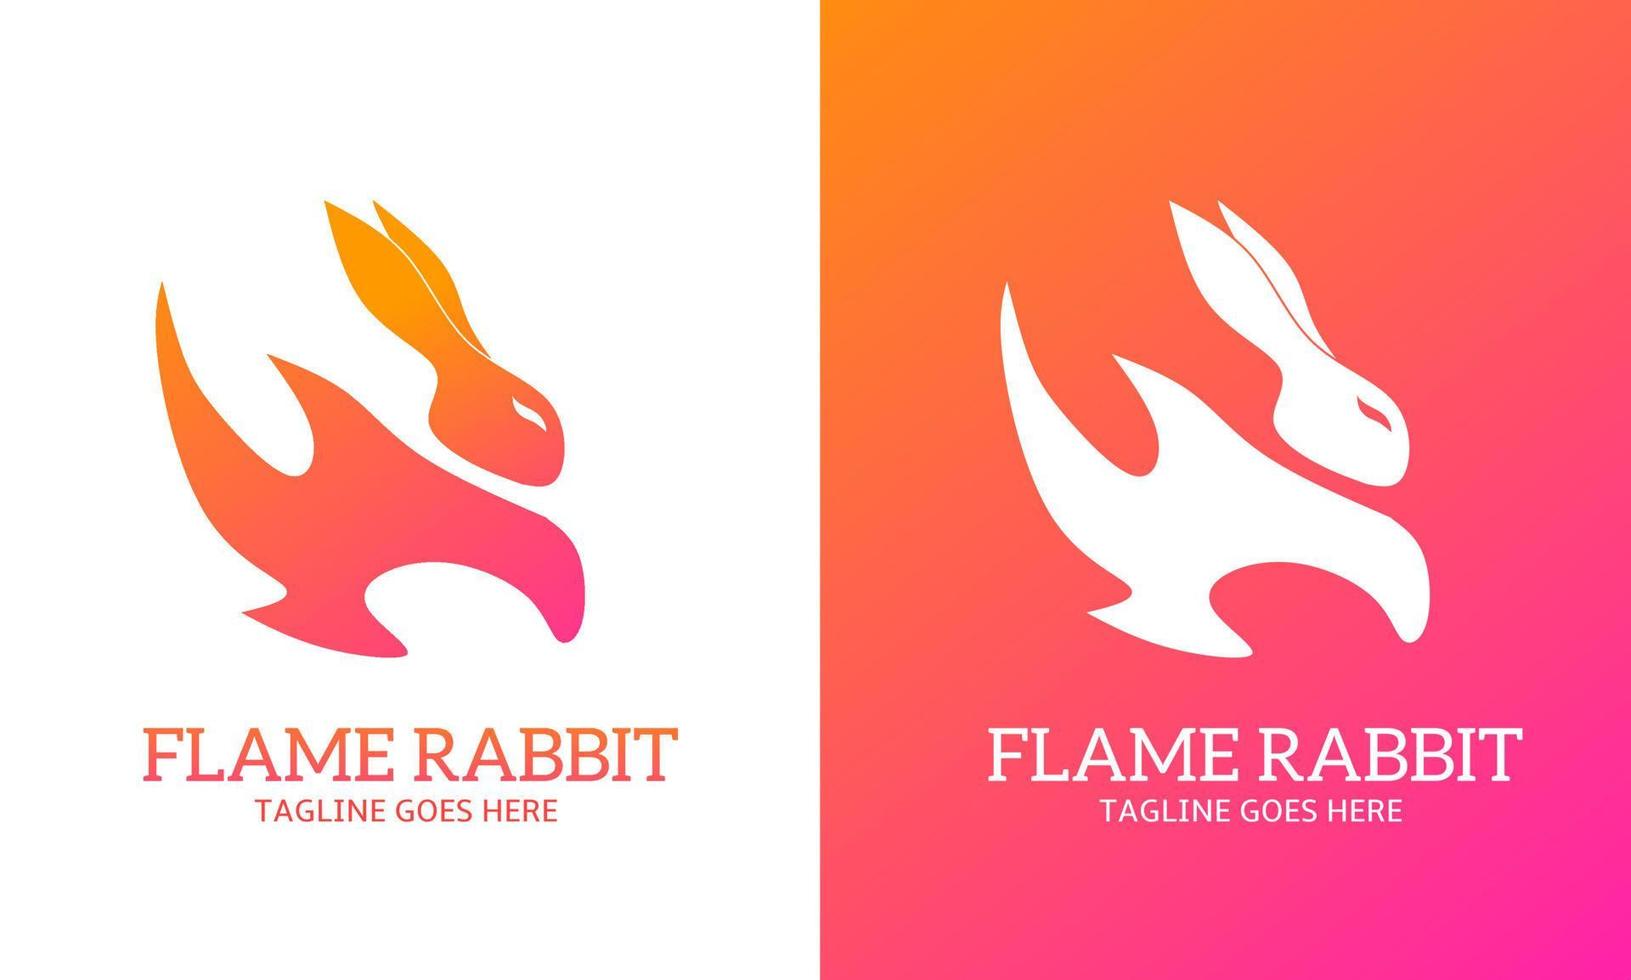 Illustrationsvektorgrafik der Flamme-Kaninchen-Logo-Vorlage vektor